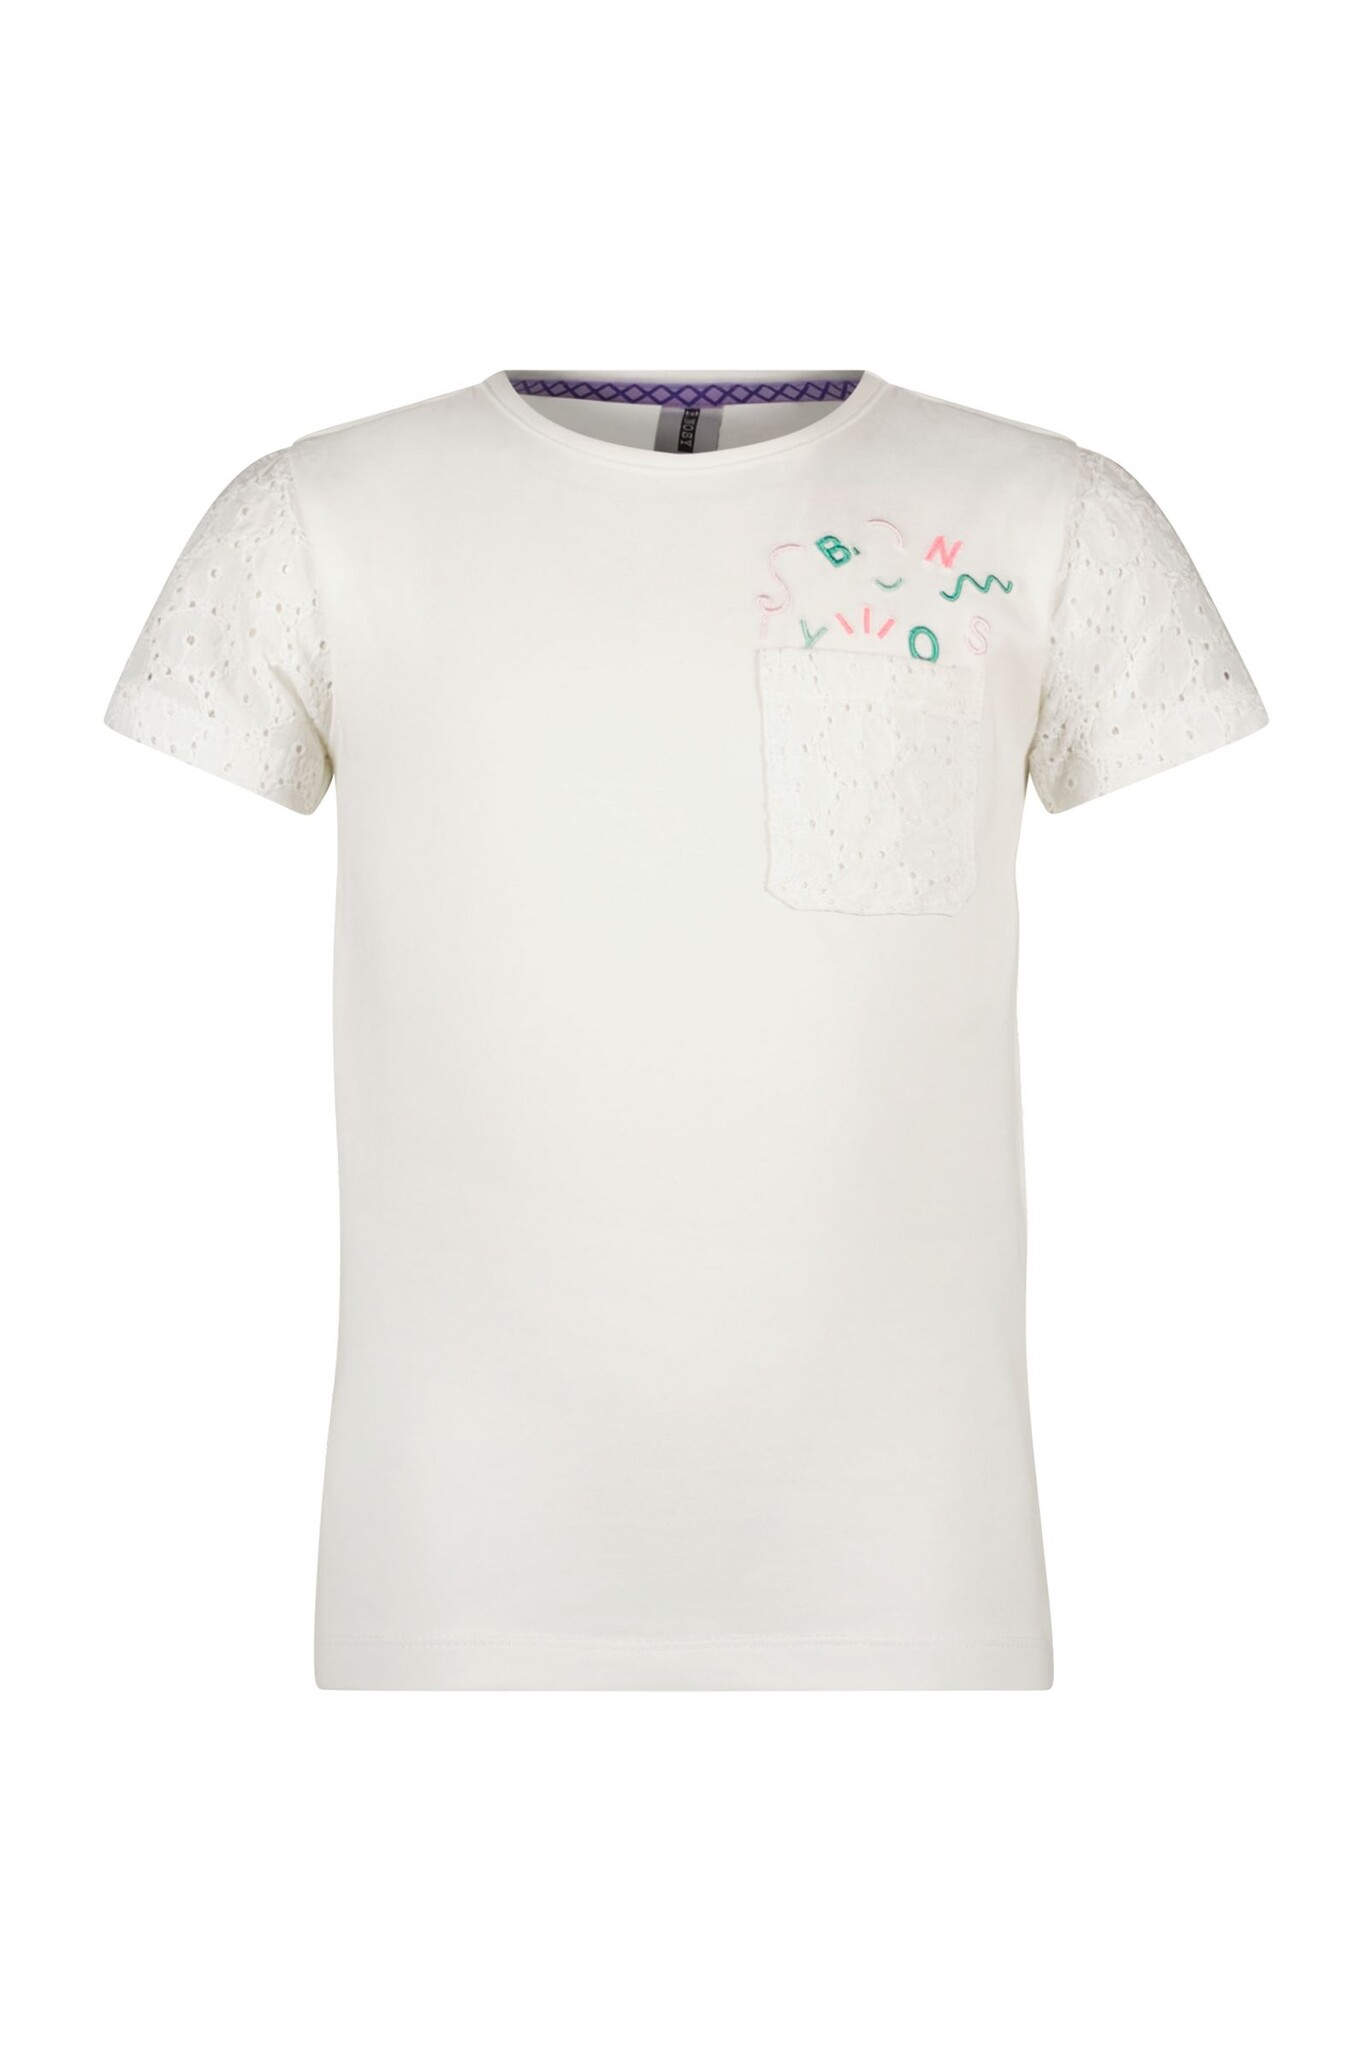 B.Nosy Meisjes t-shirt - Emma - Cotton